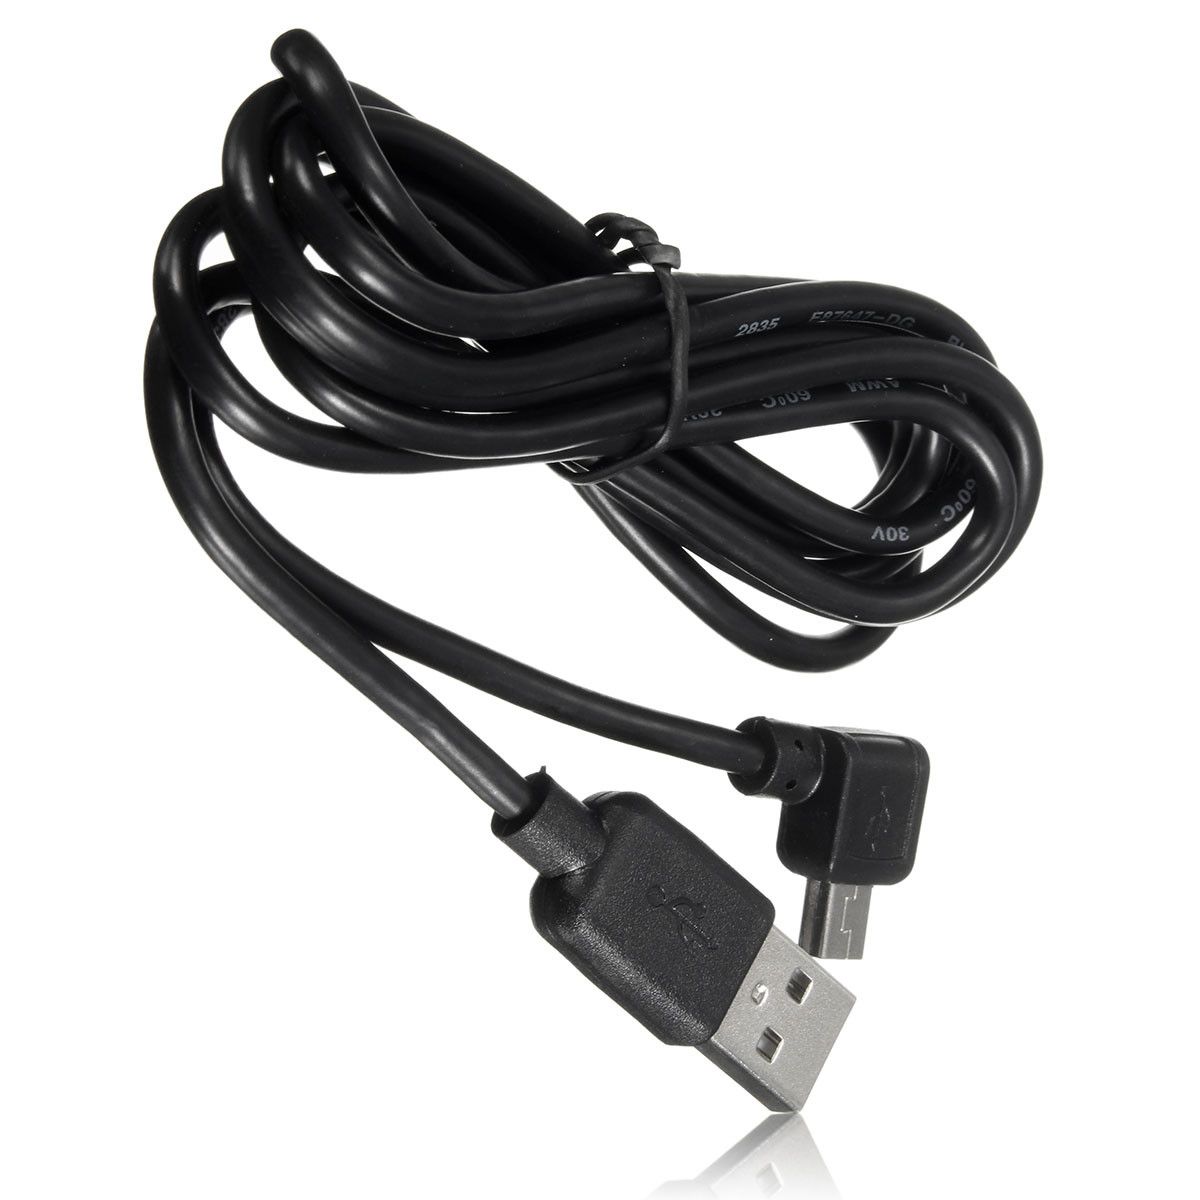 Mini-USB-PC-Data-Cable-For-Genuine-TomTom-XL-XXL-150cm-Long-Black-1386060